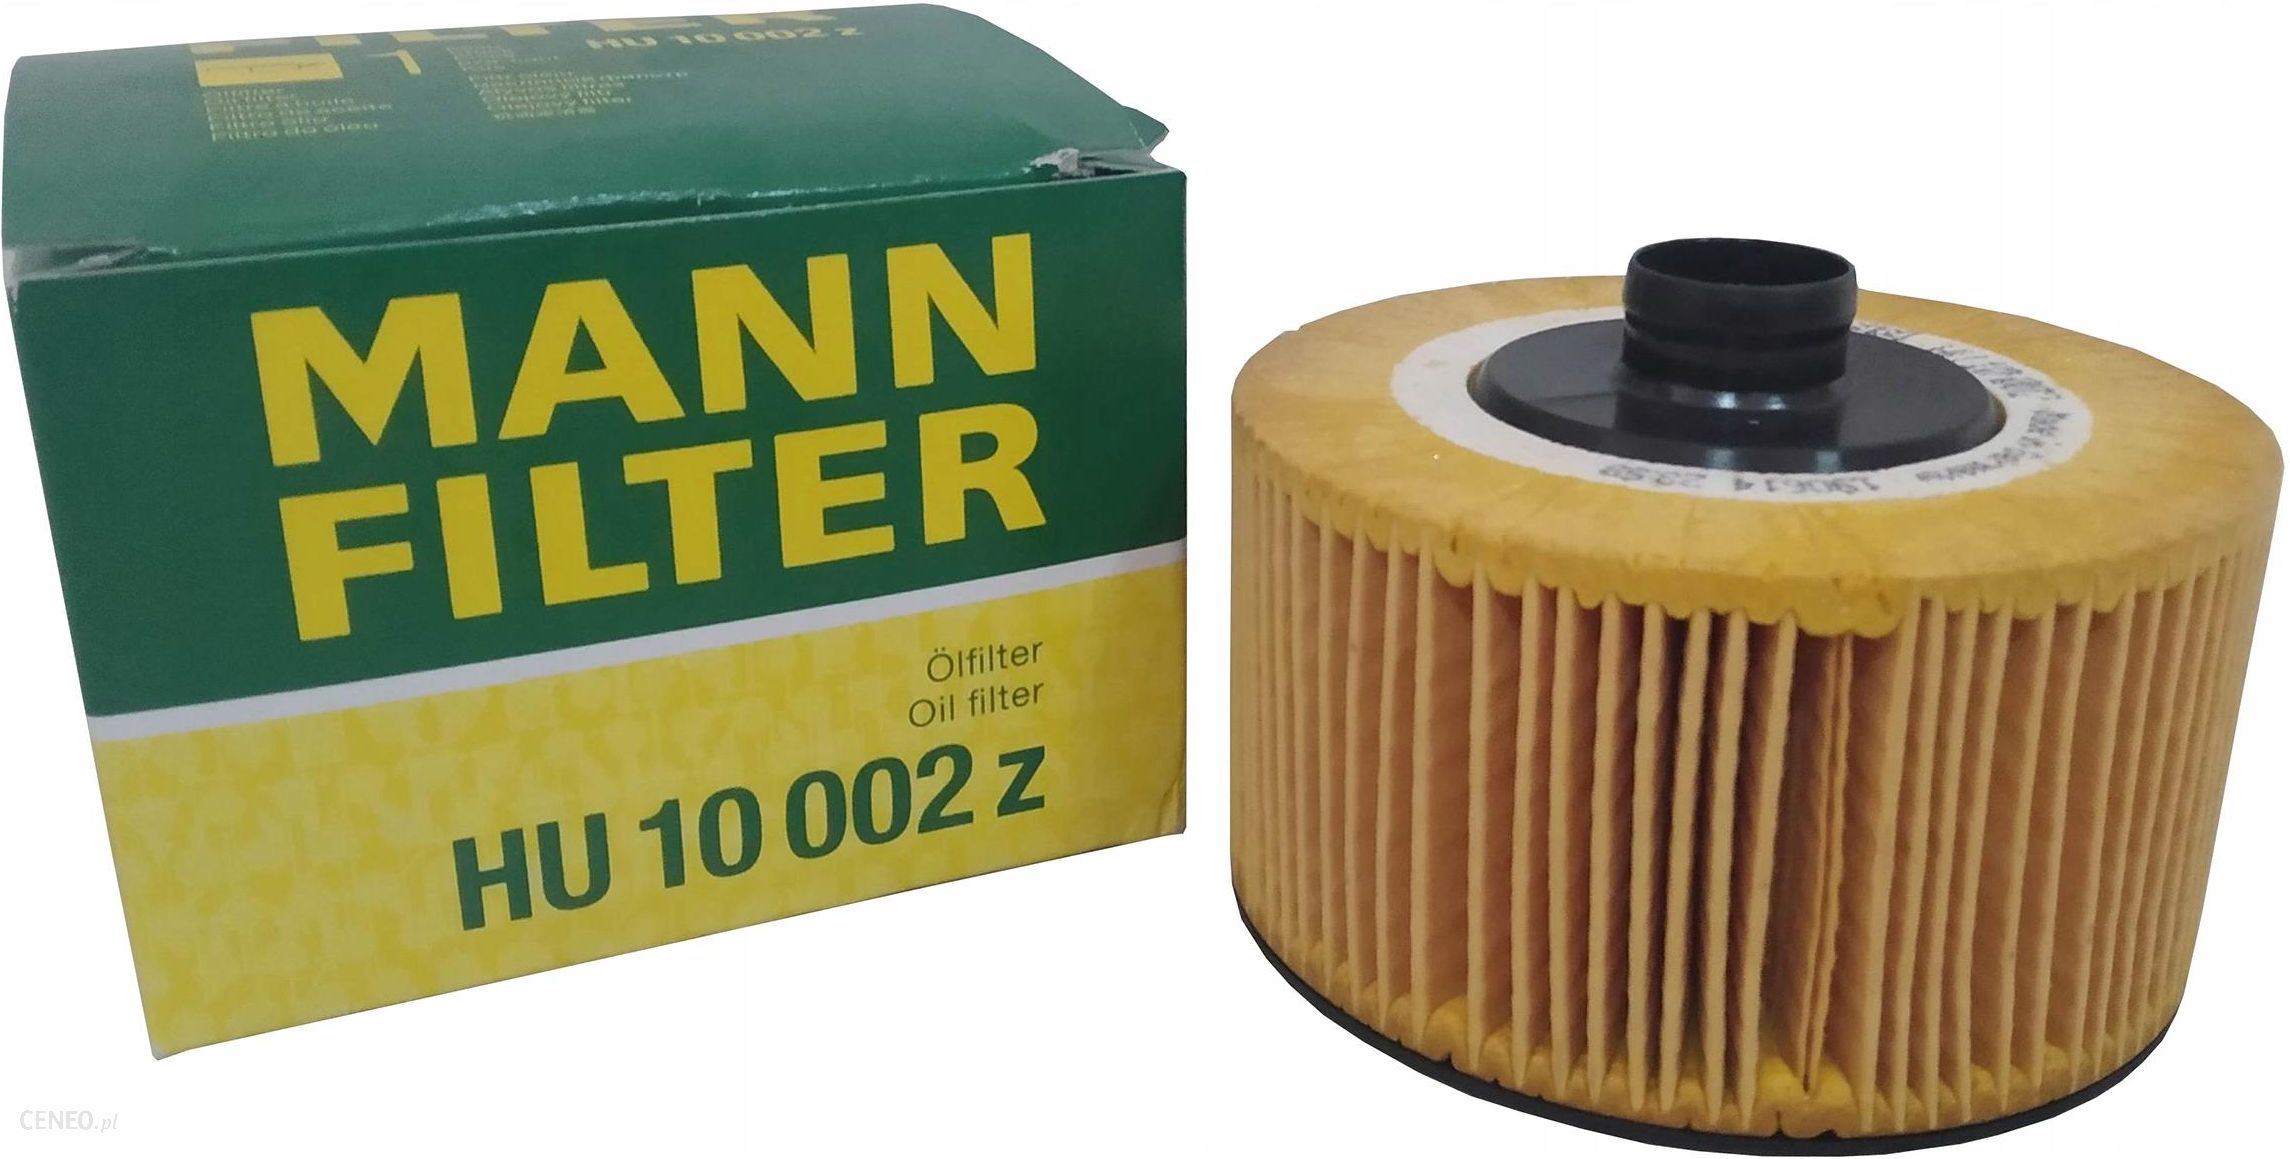 MANN-FILTER マンフィルター エアコンフィルター 脱臭フィルター RENAULT Twingo III 1.0 SCe65 14 09〜  CUK22021 通販